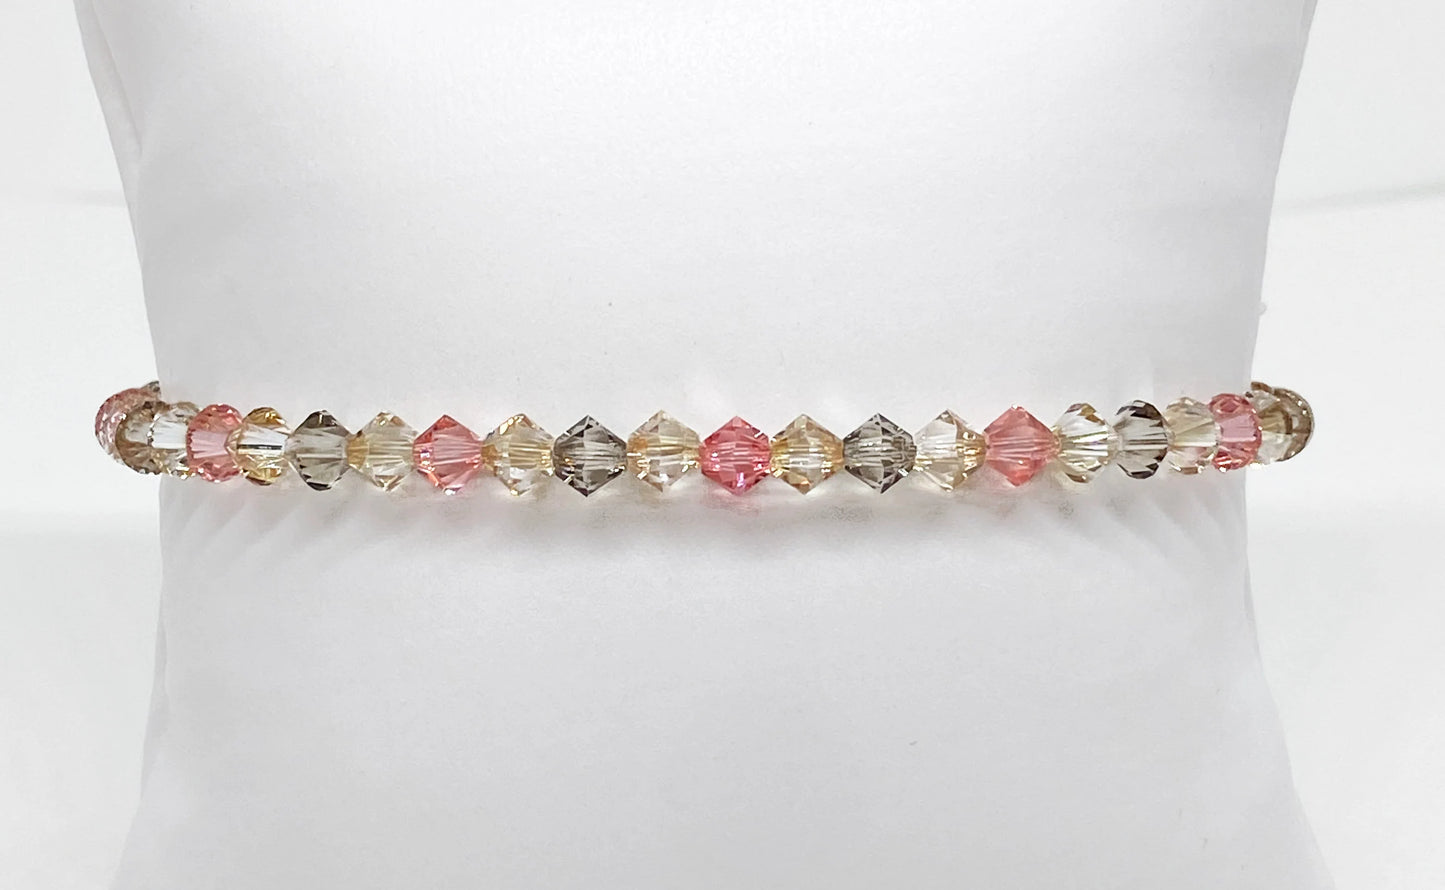 Swarovski Crystal Stretch Accent Bracelet in Rose Peach